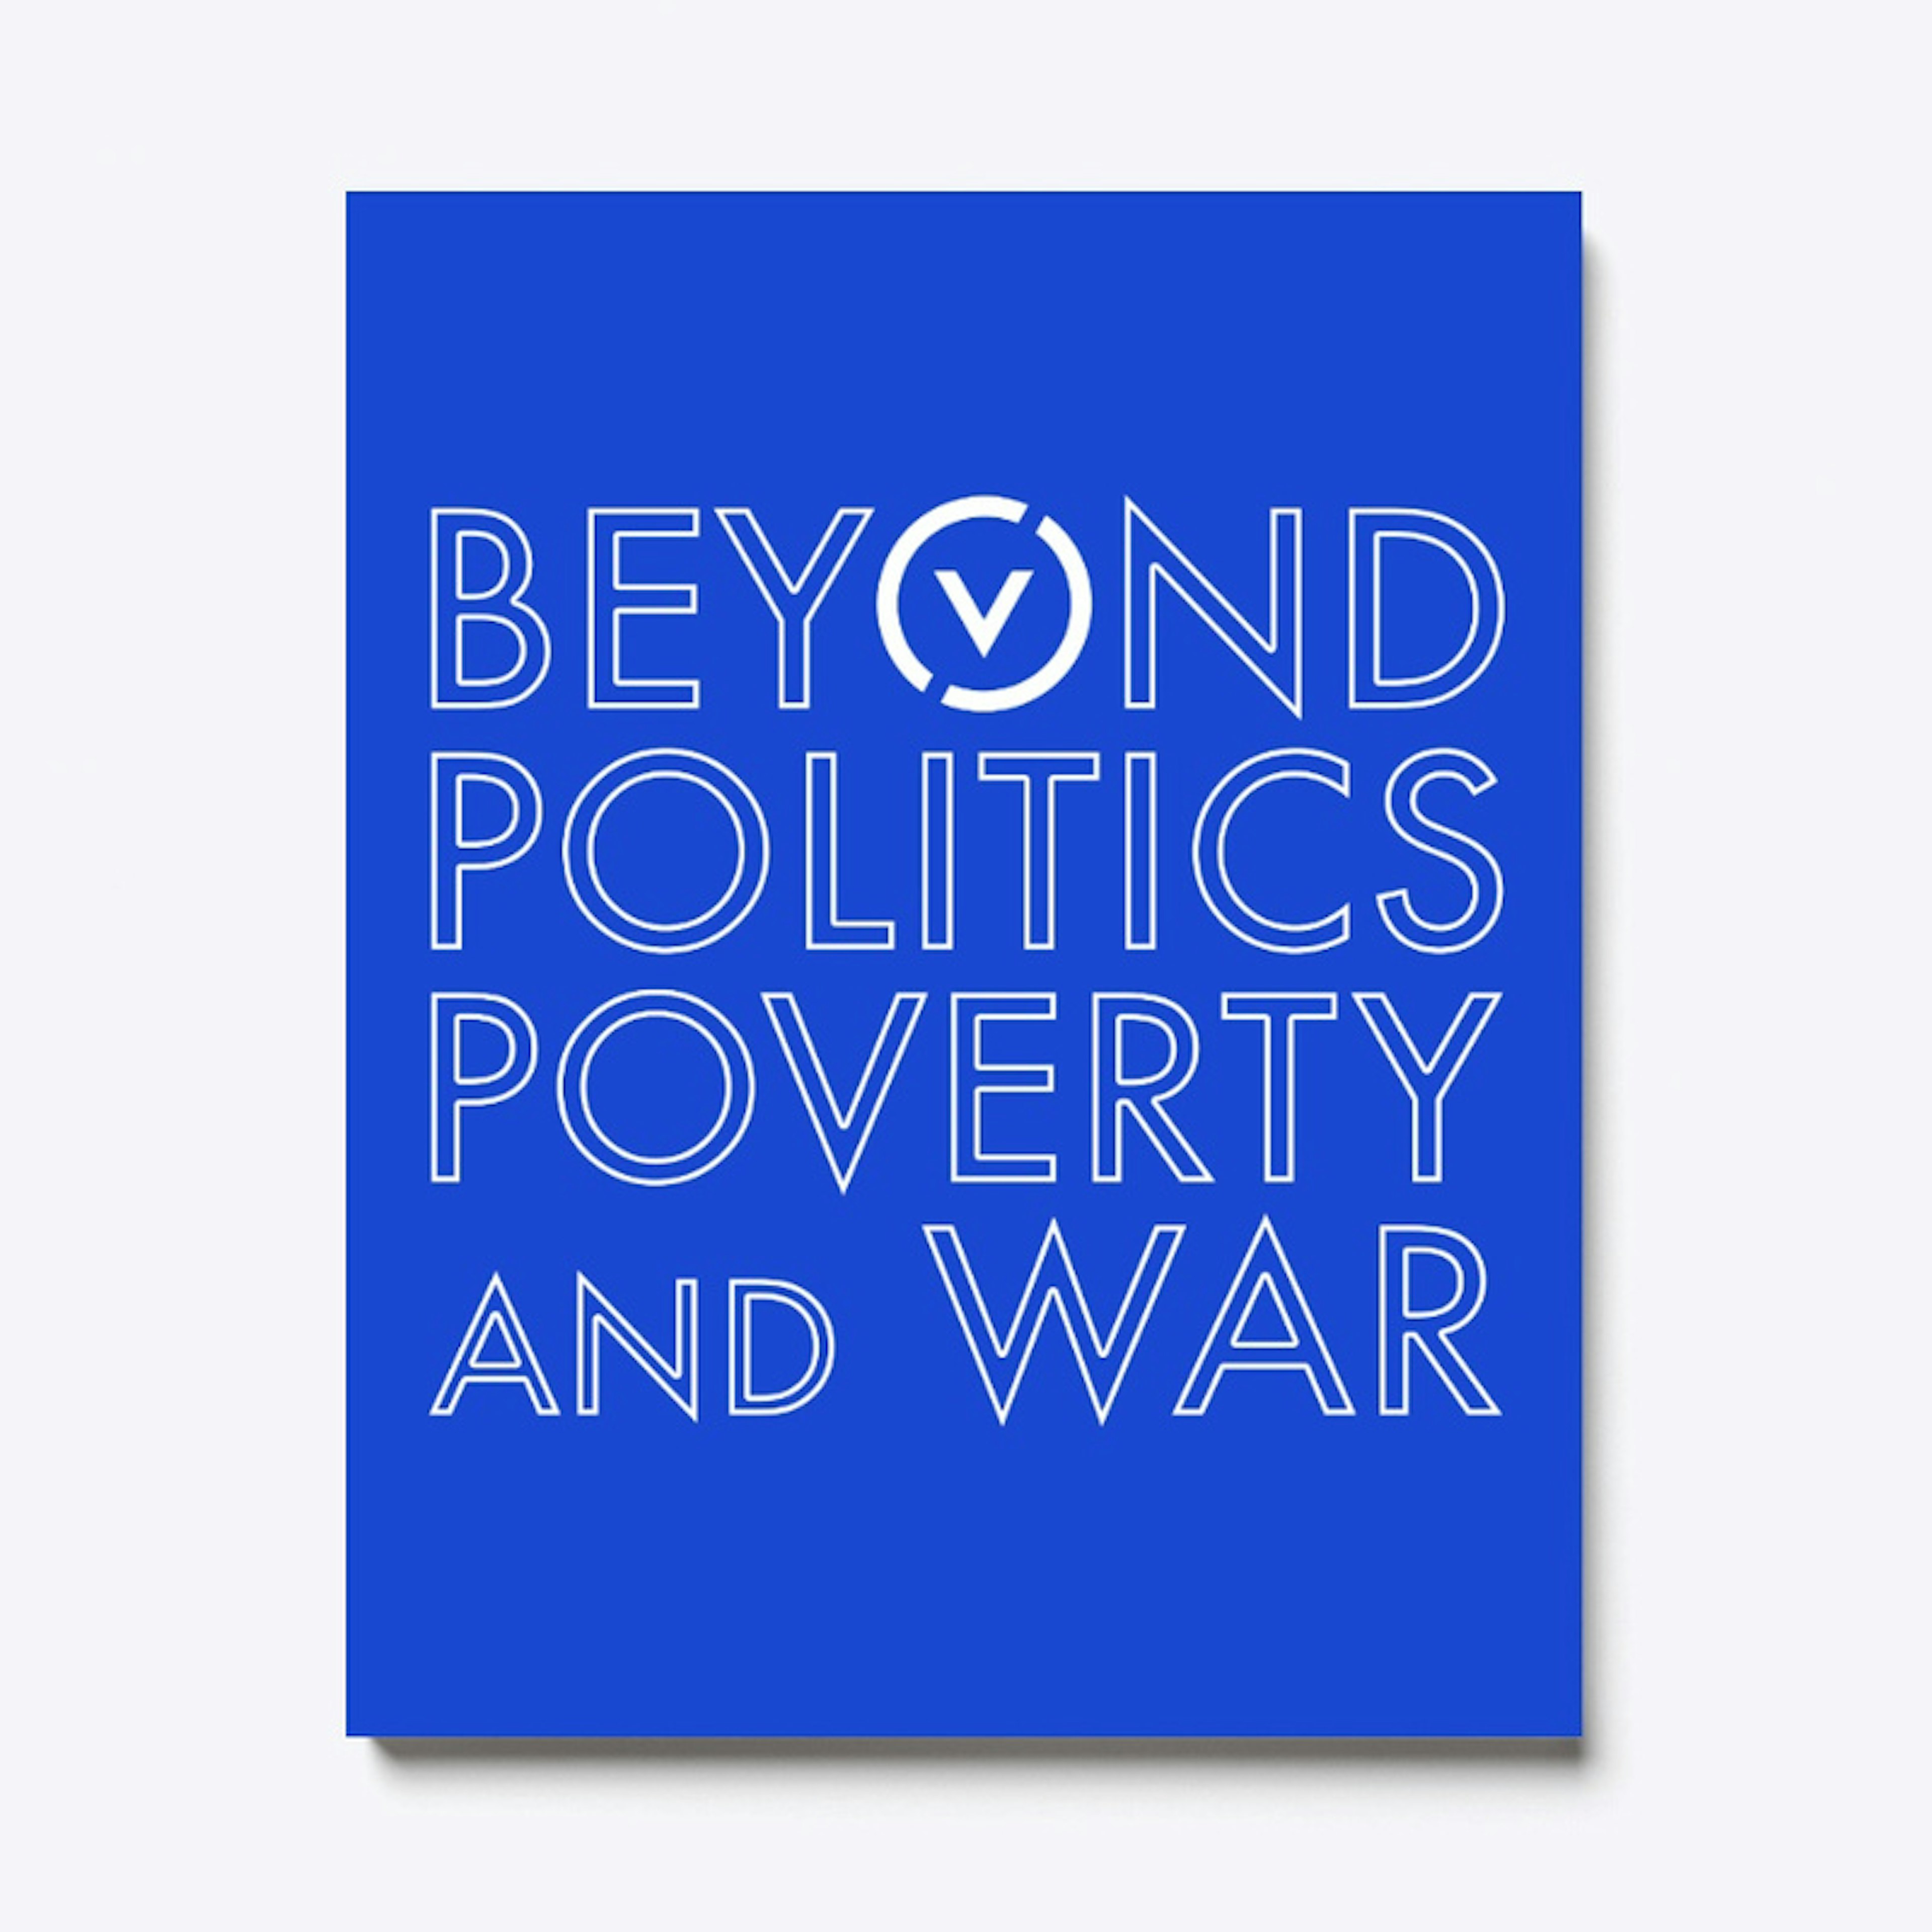 Beyond Politics Poverty War - BC - SP1